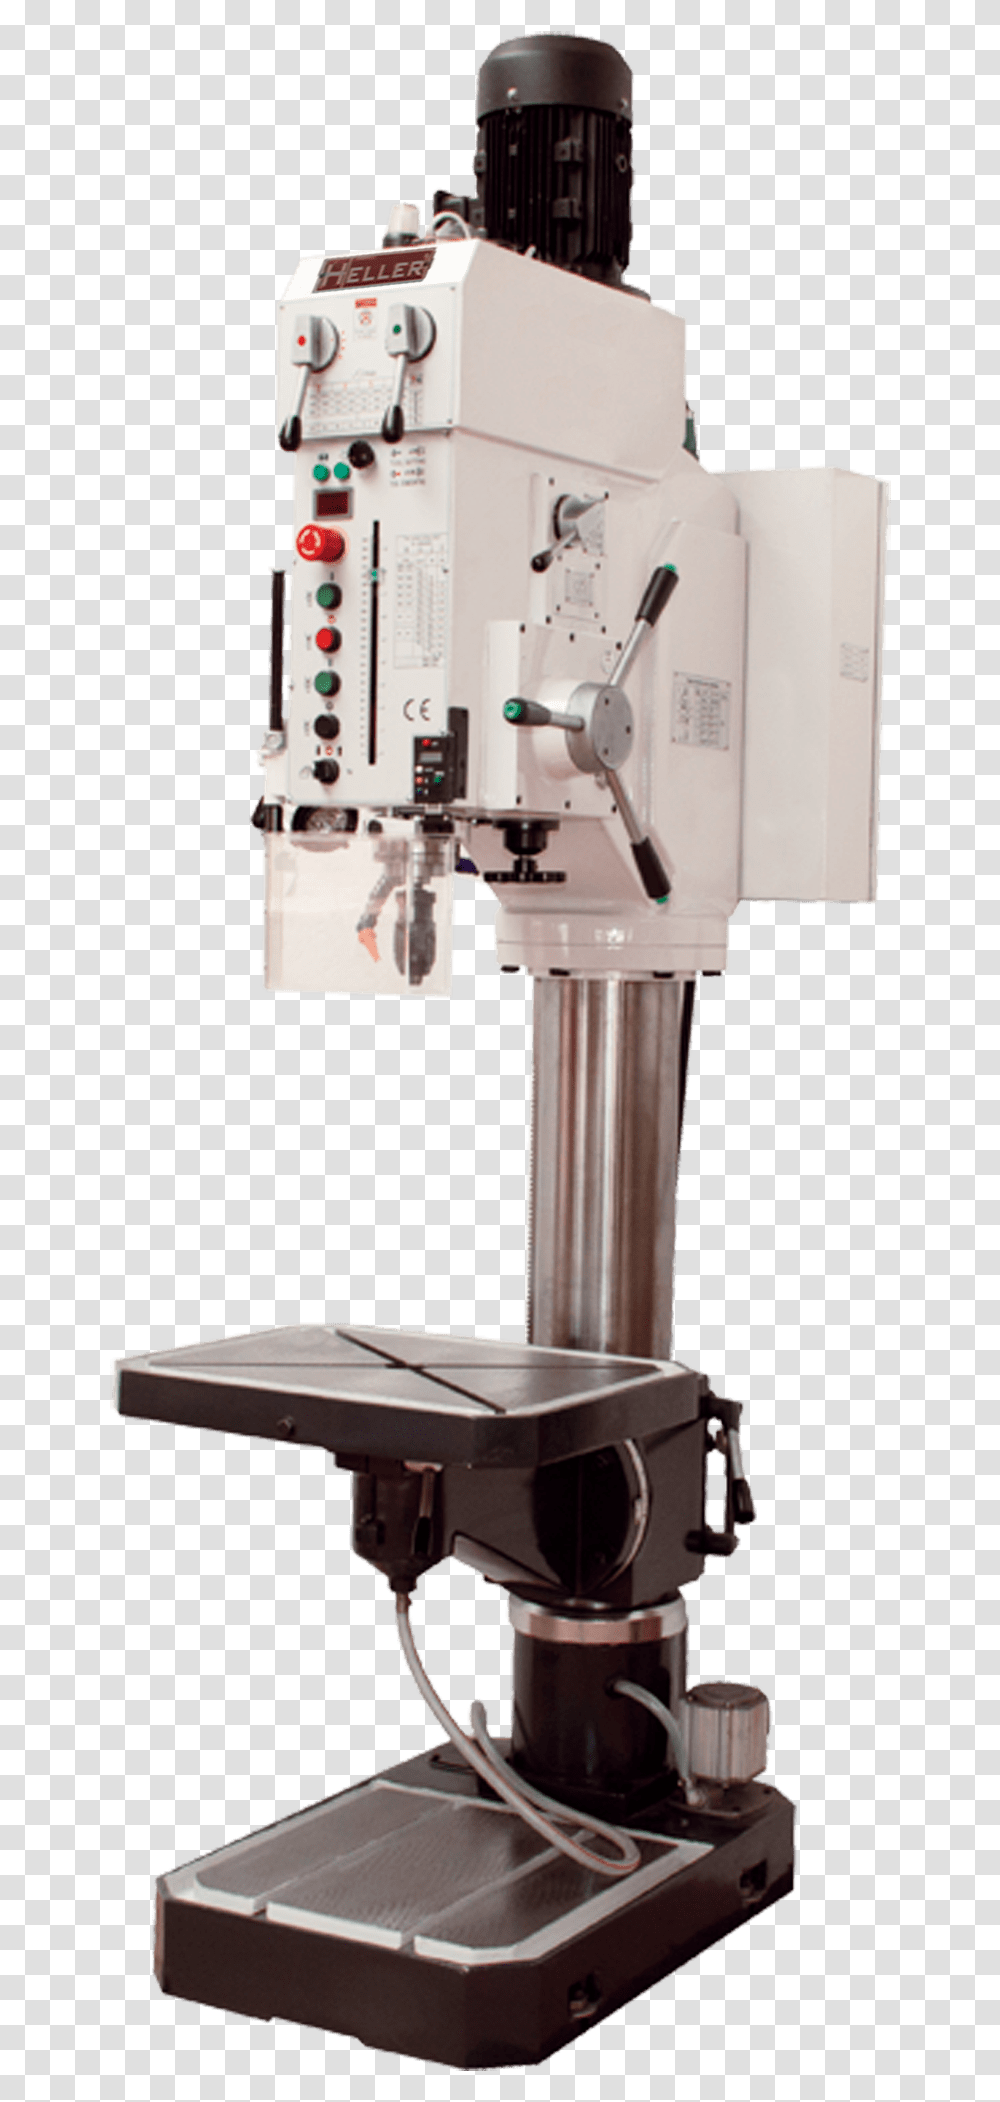 Column Drill Machine Heller B50e Taladro De Columna Heller, Microscope, Robot, Toy, Lathe Transparent Png